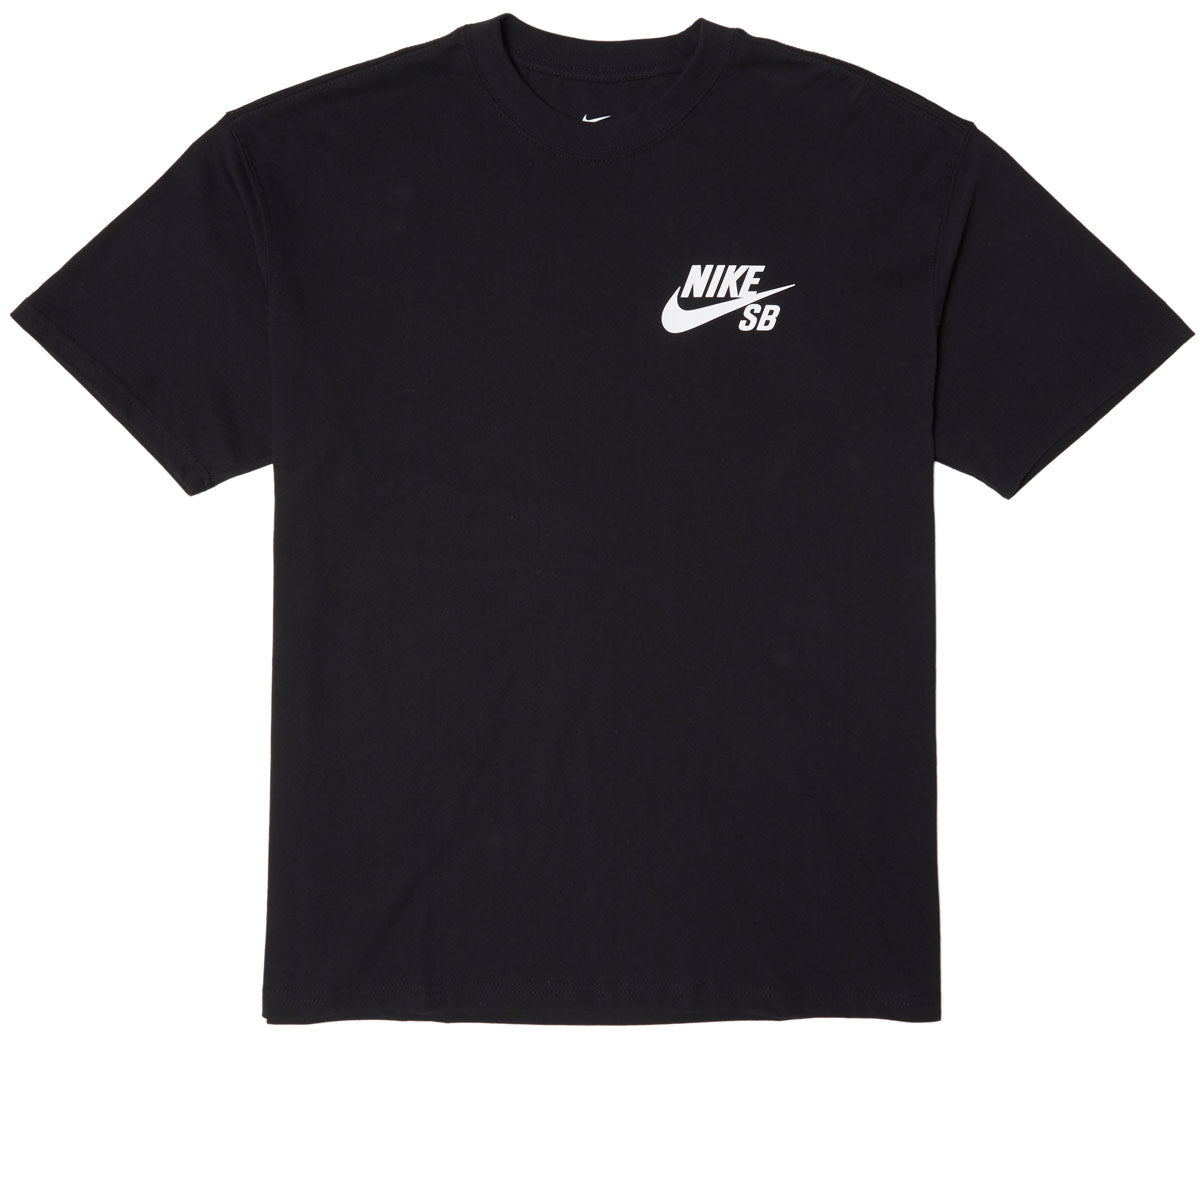 Nike SB New Logo T-Shirt - Black/White image 1